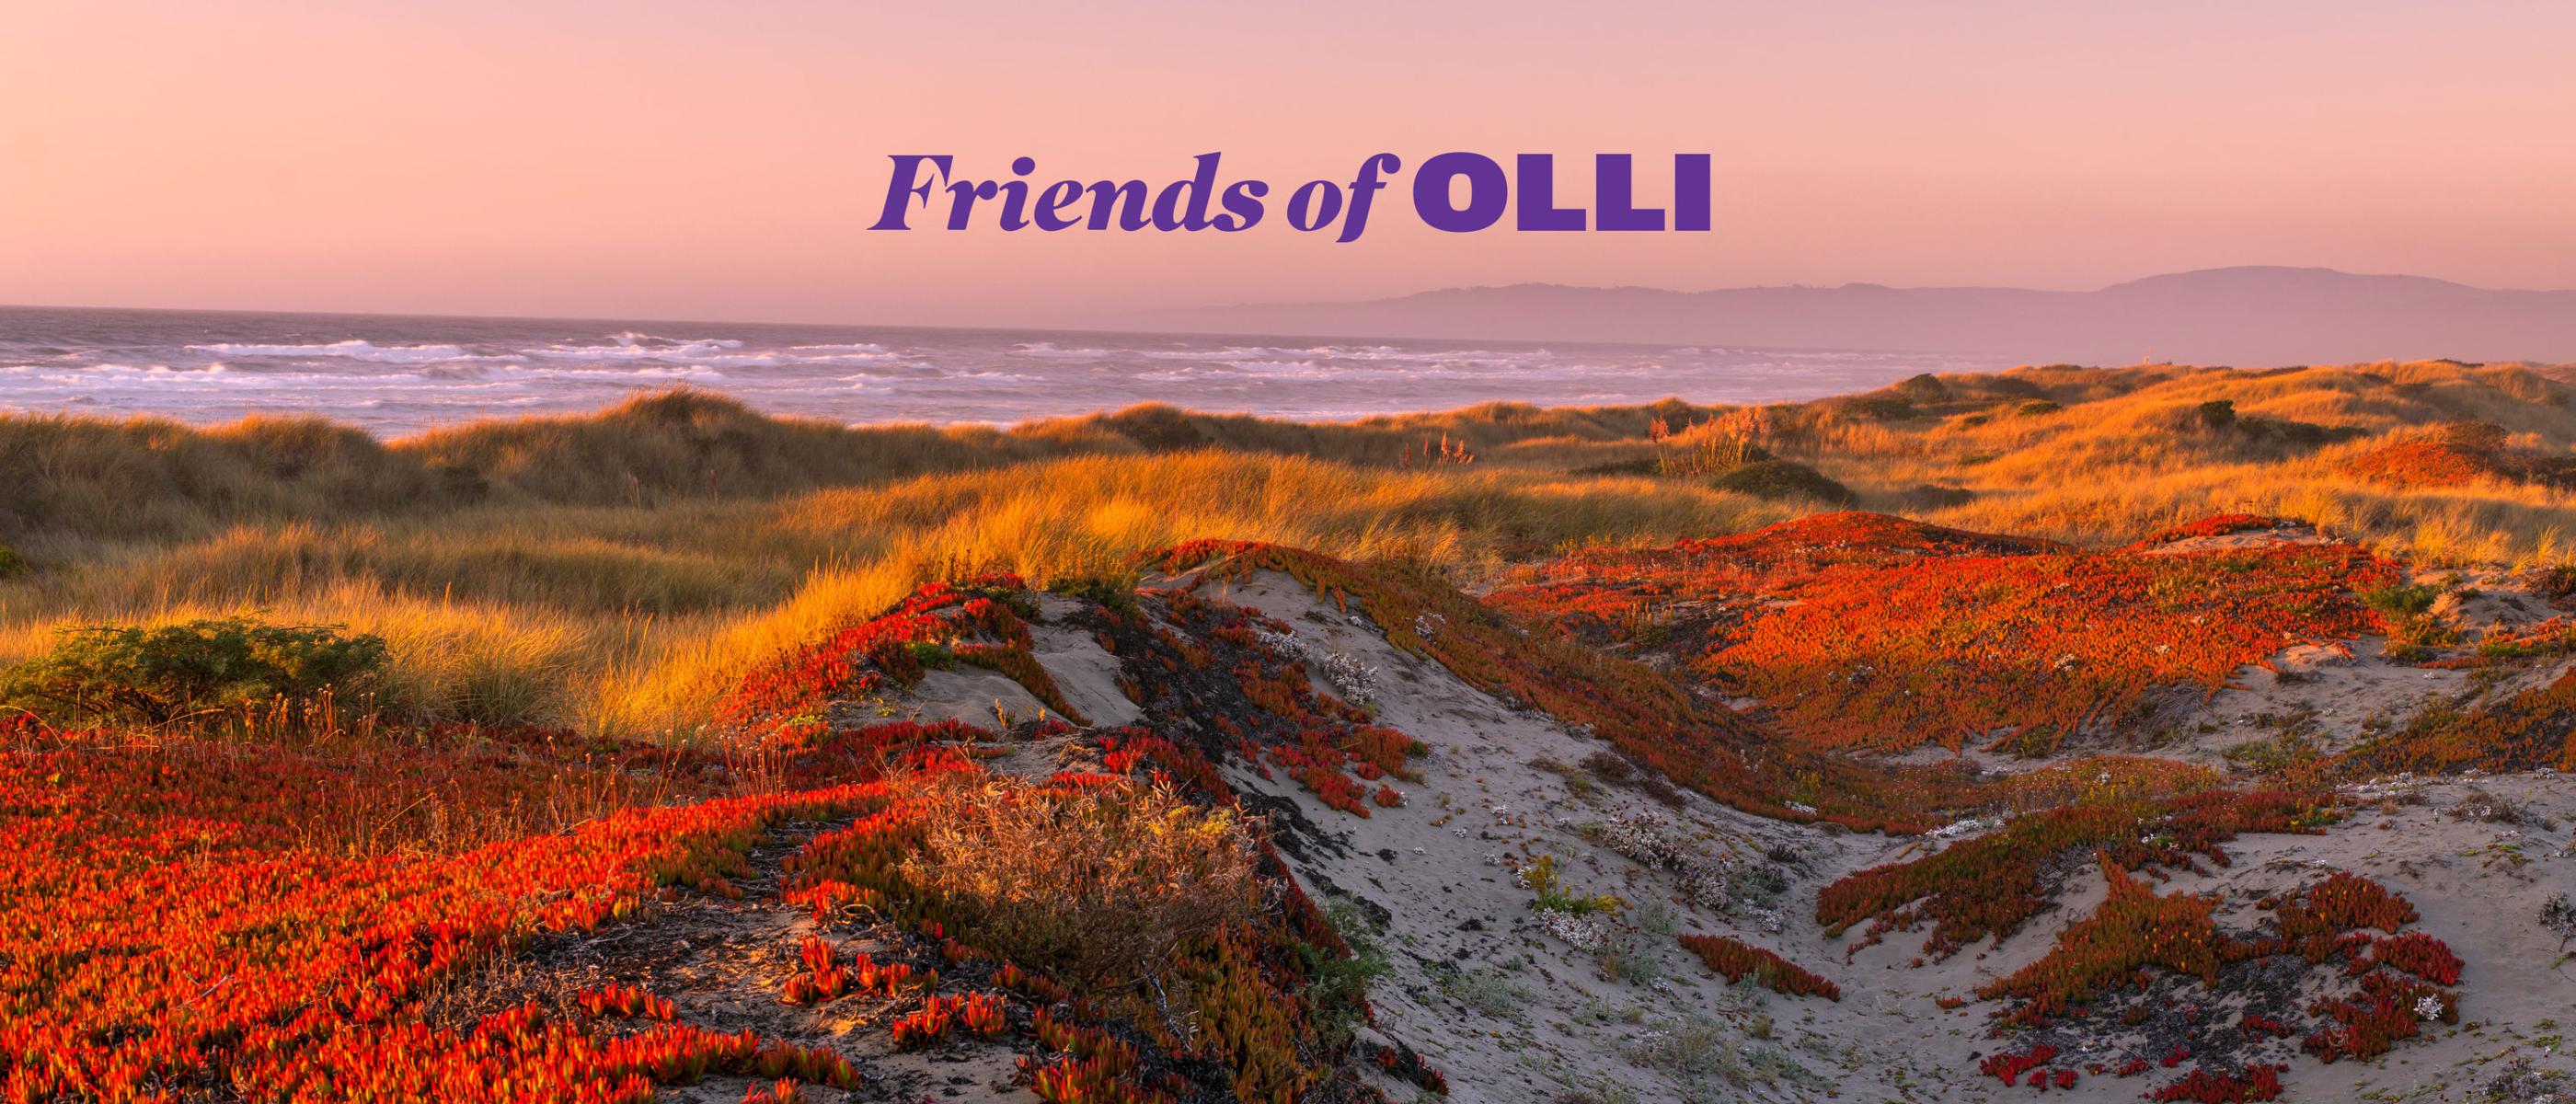 Friends of OLLI